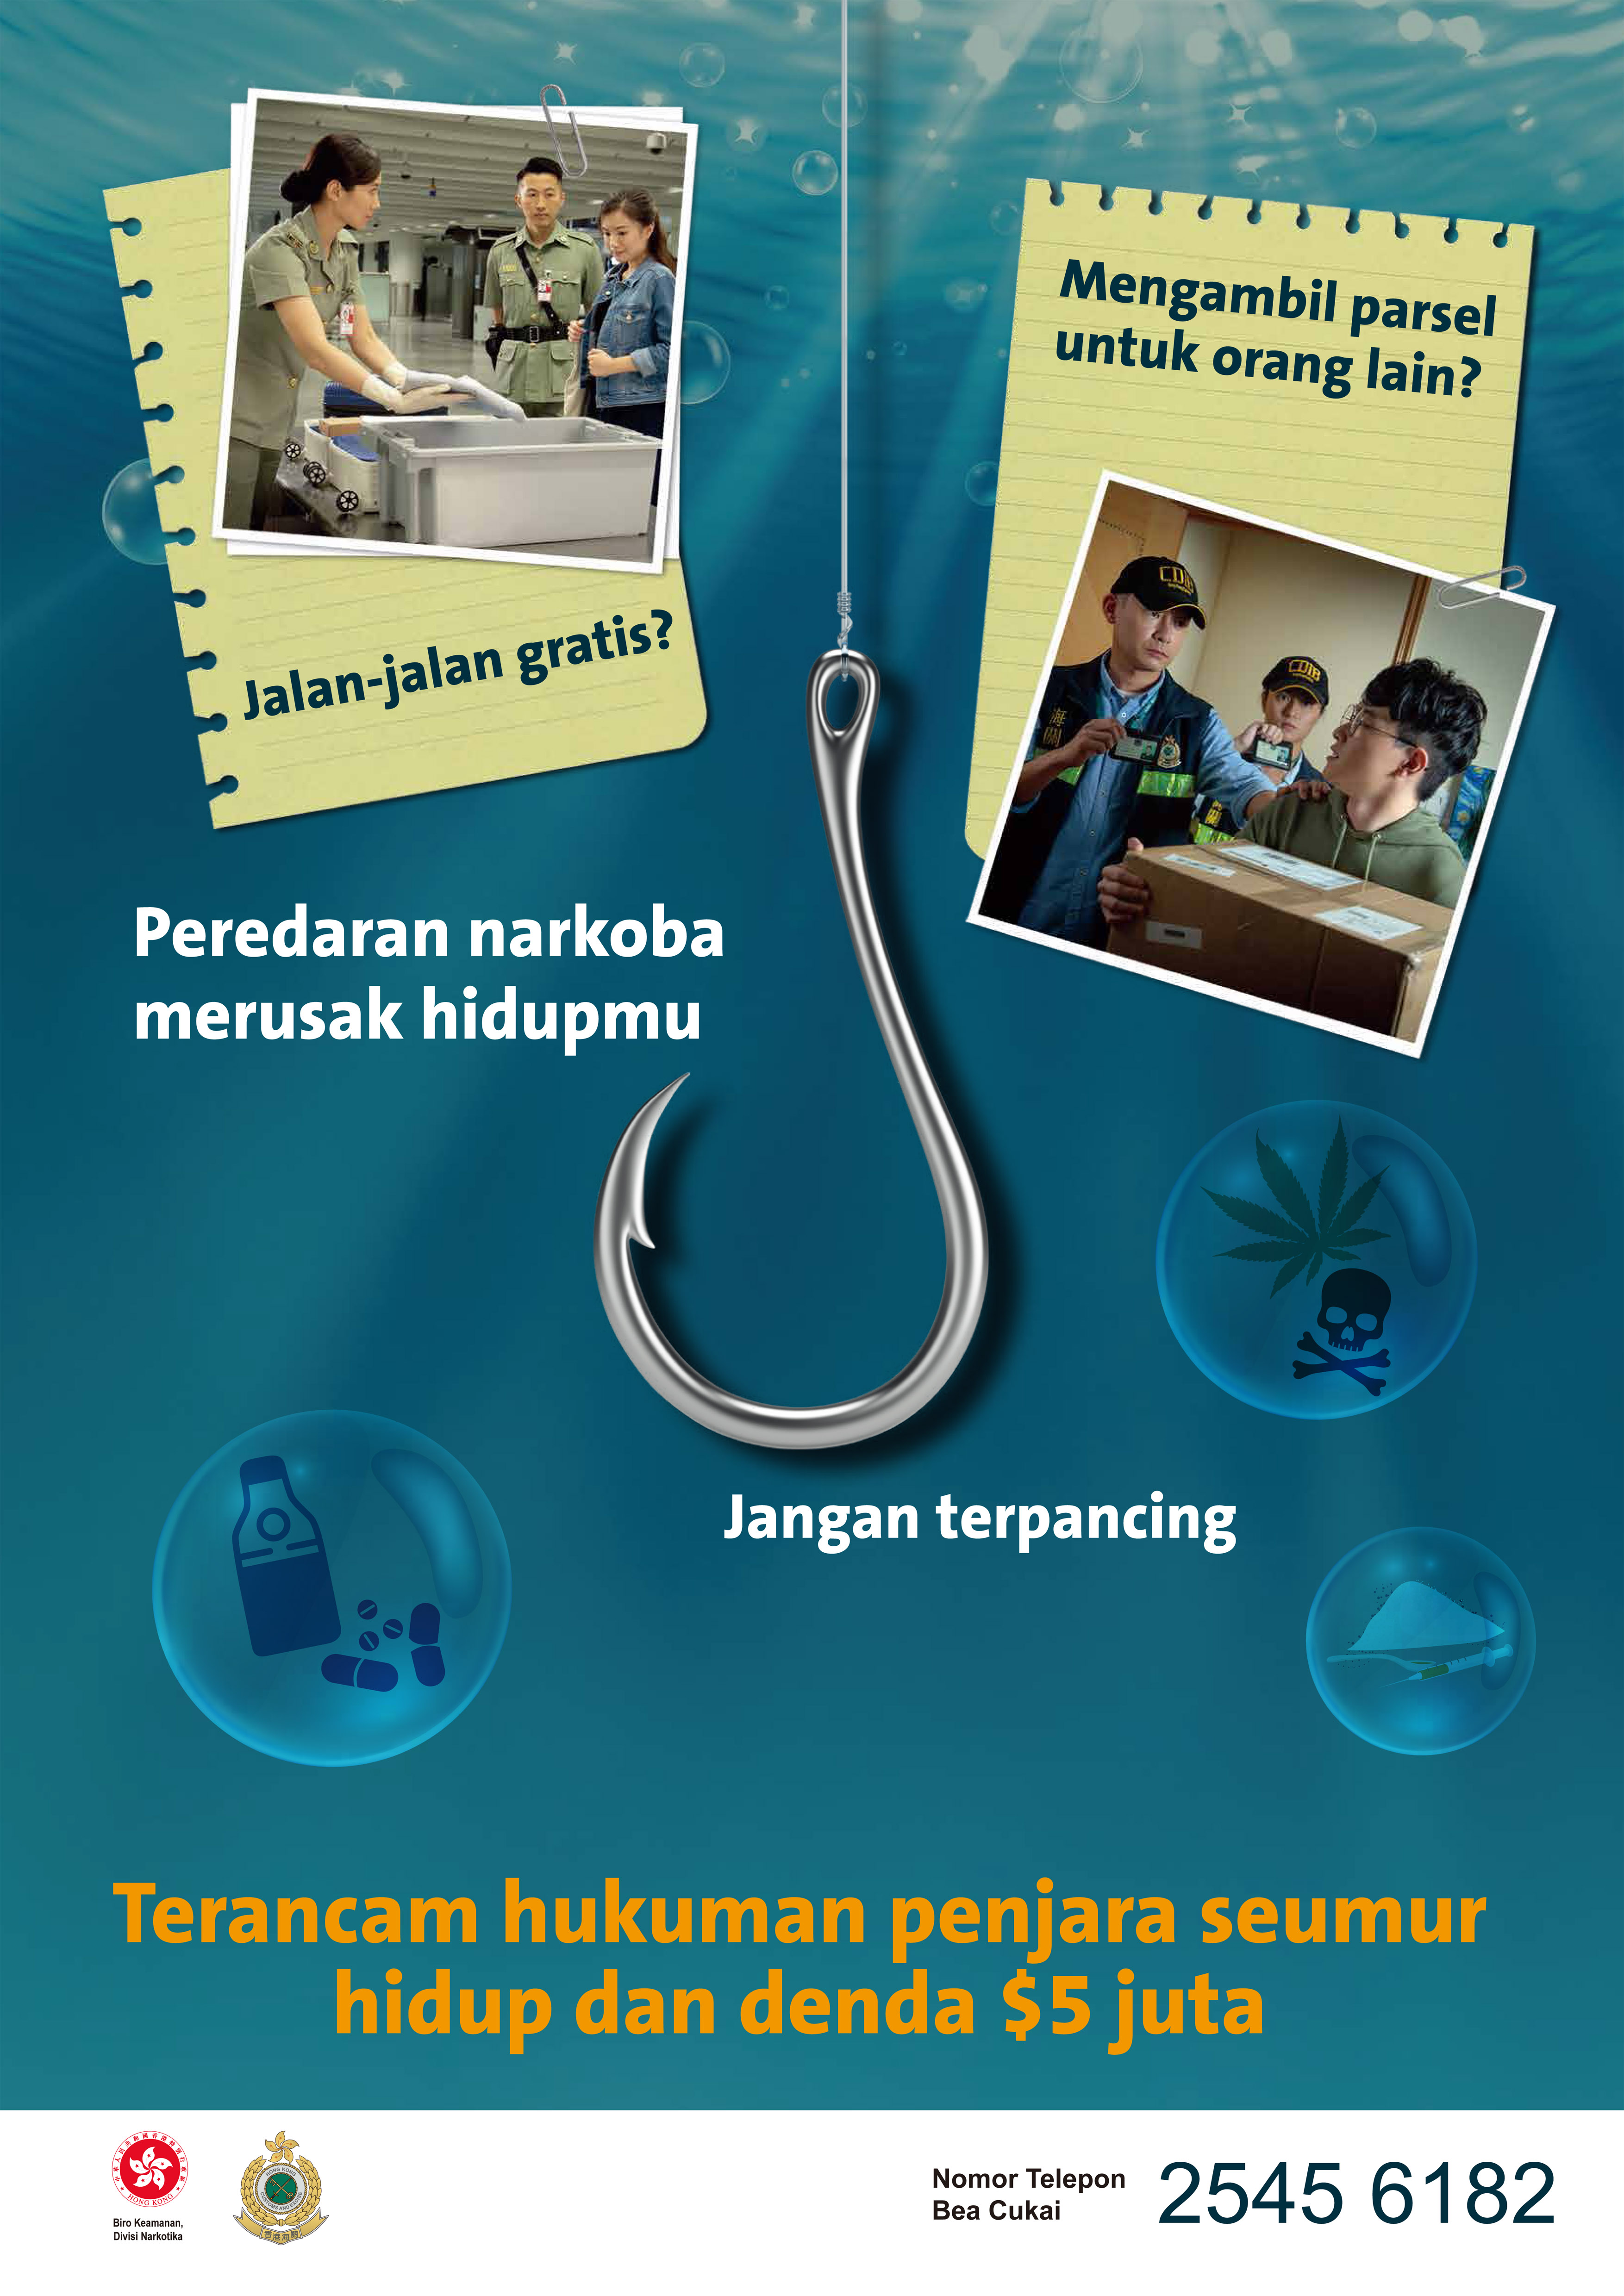 Anti-drug poster - Bahasa Indonesia version